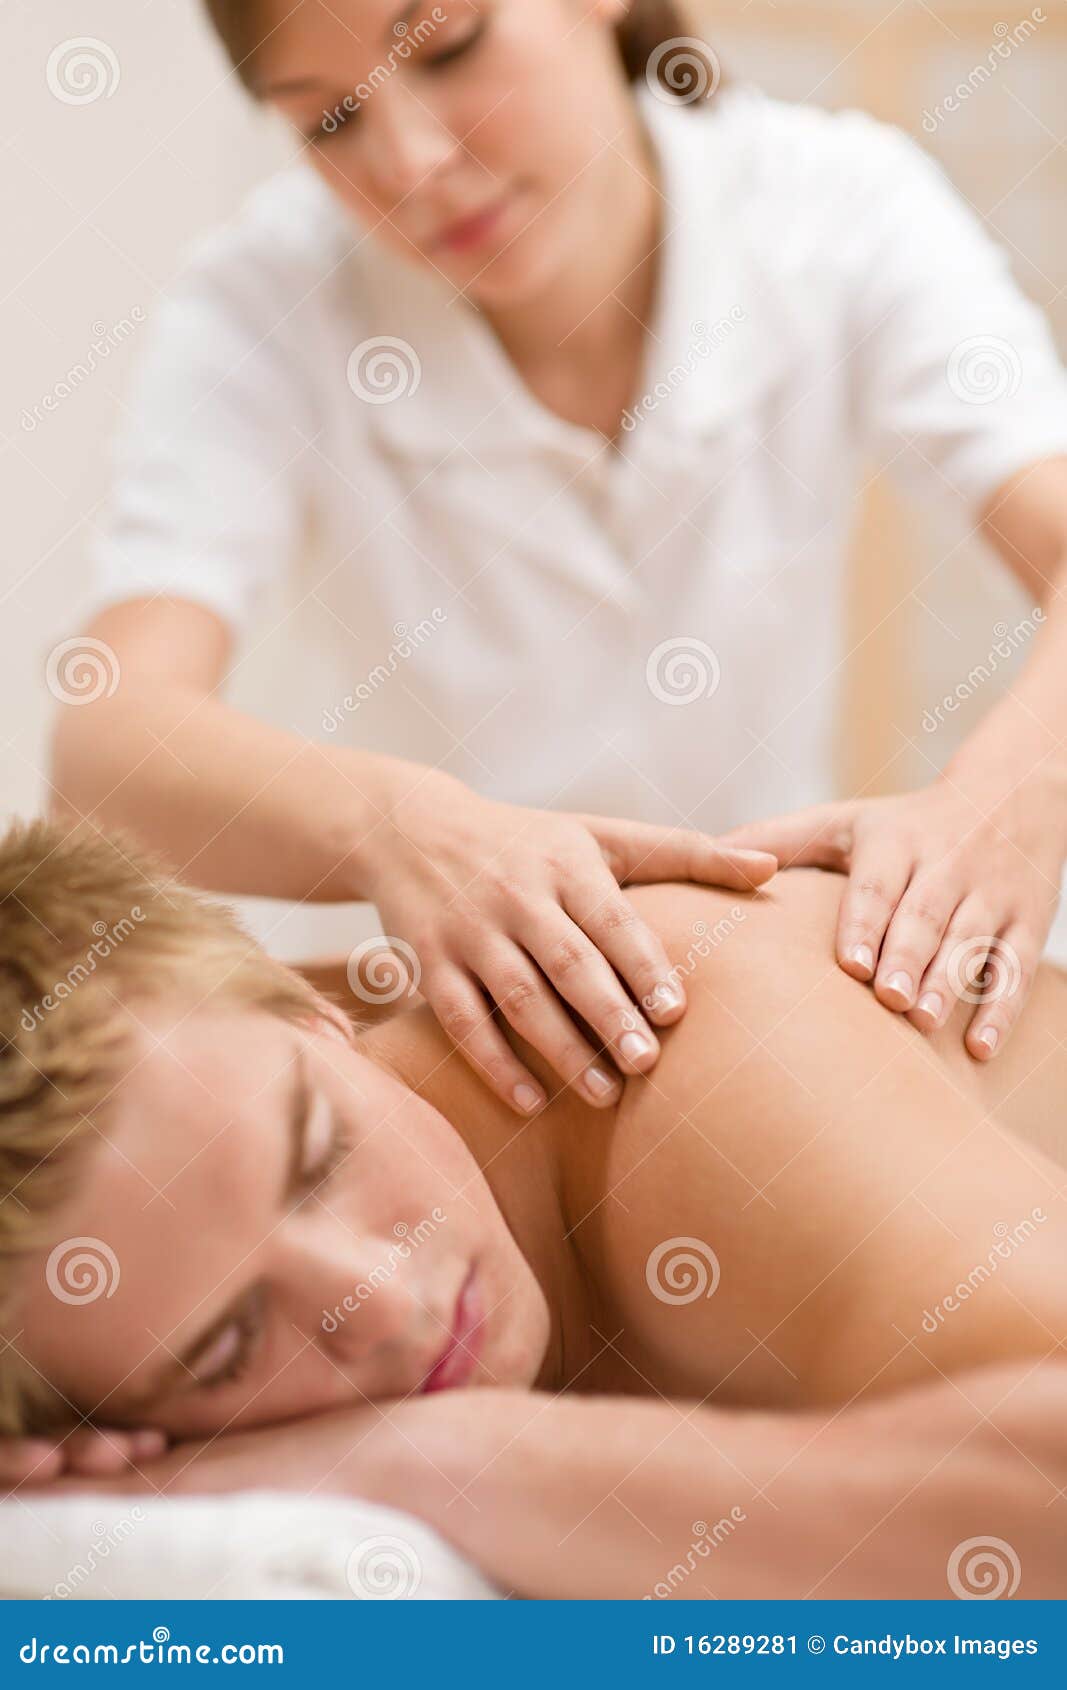 A Man Having a Back Massage · Free Stock Photo